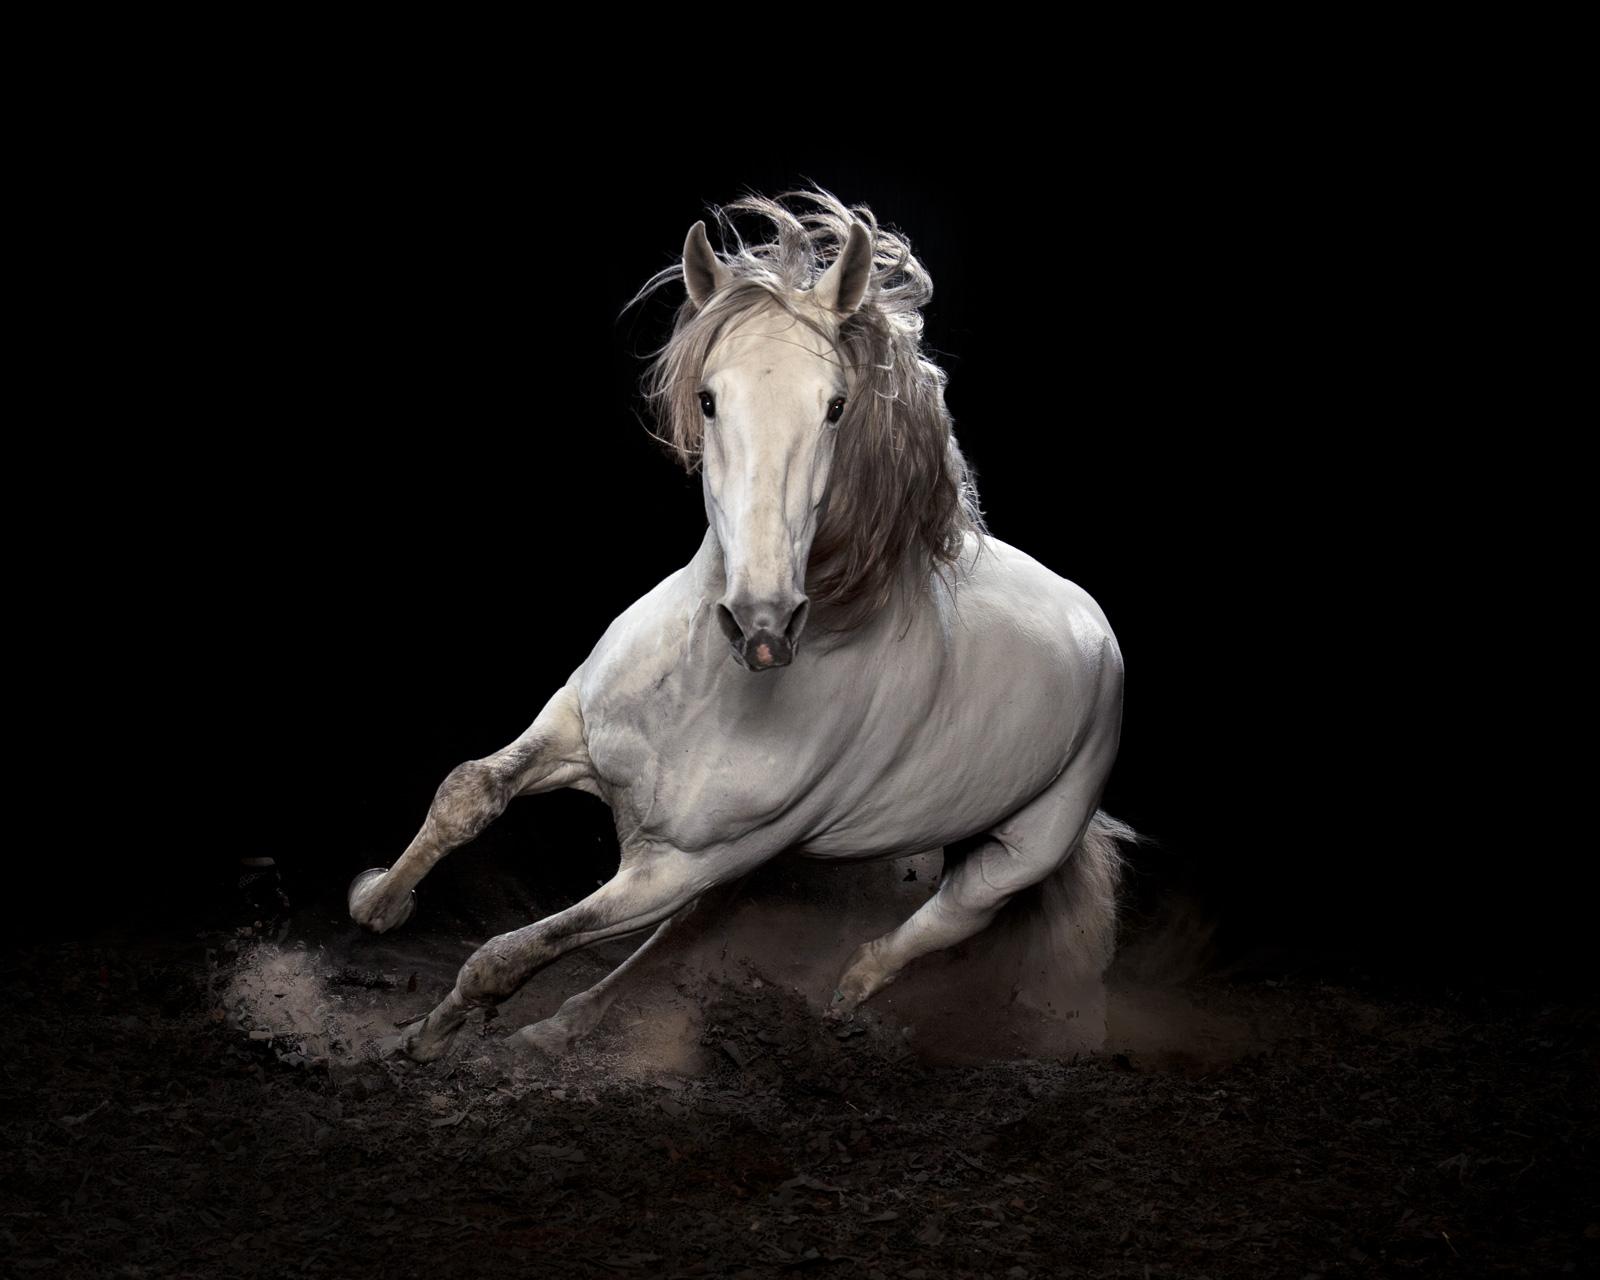 Tim Platt Color Photograph - "Ehpico d’ Atela” pure bred Lusitano stallion #1 - Horse, Limited edition print